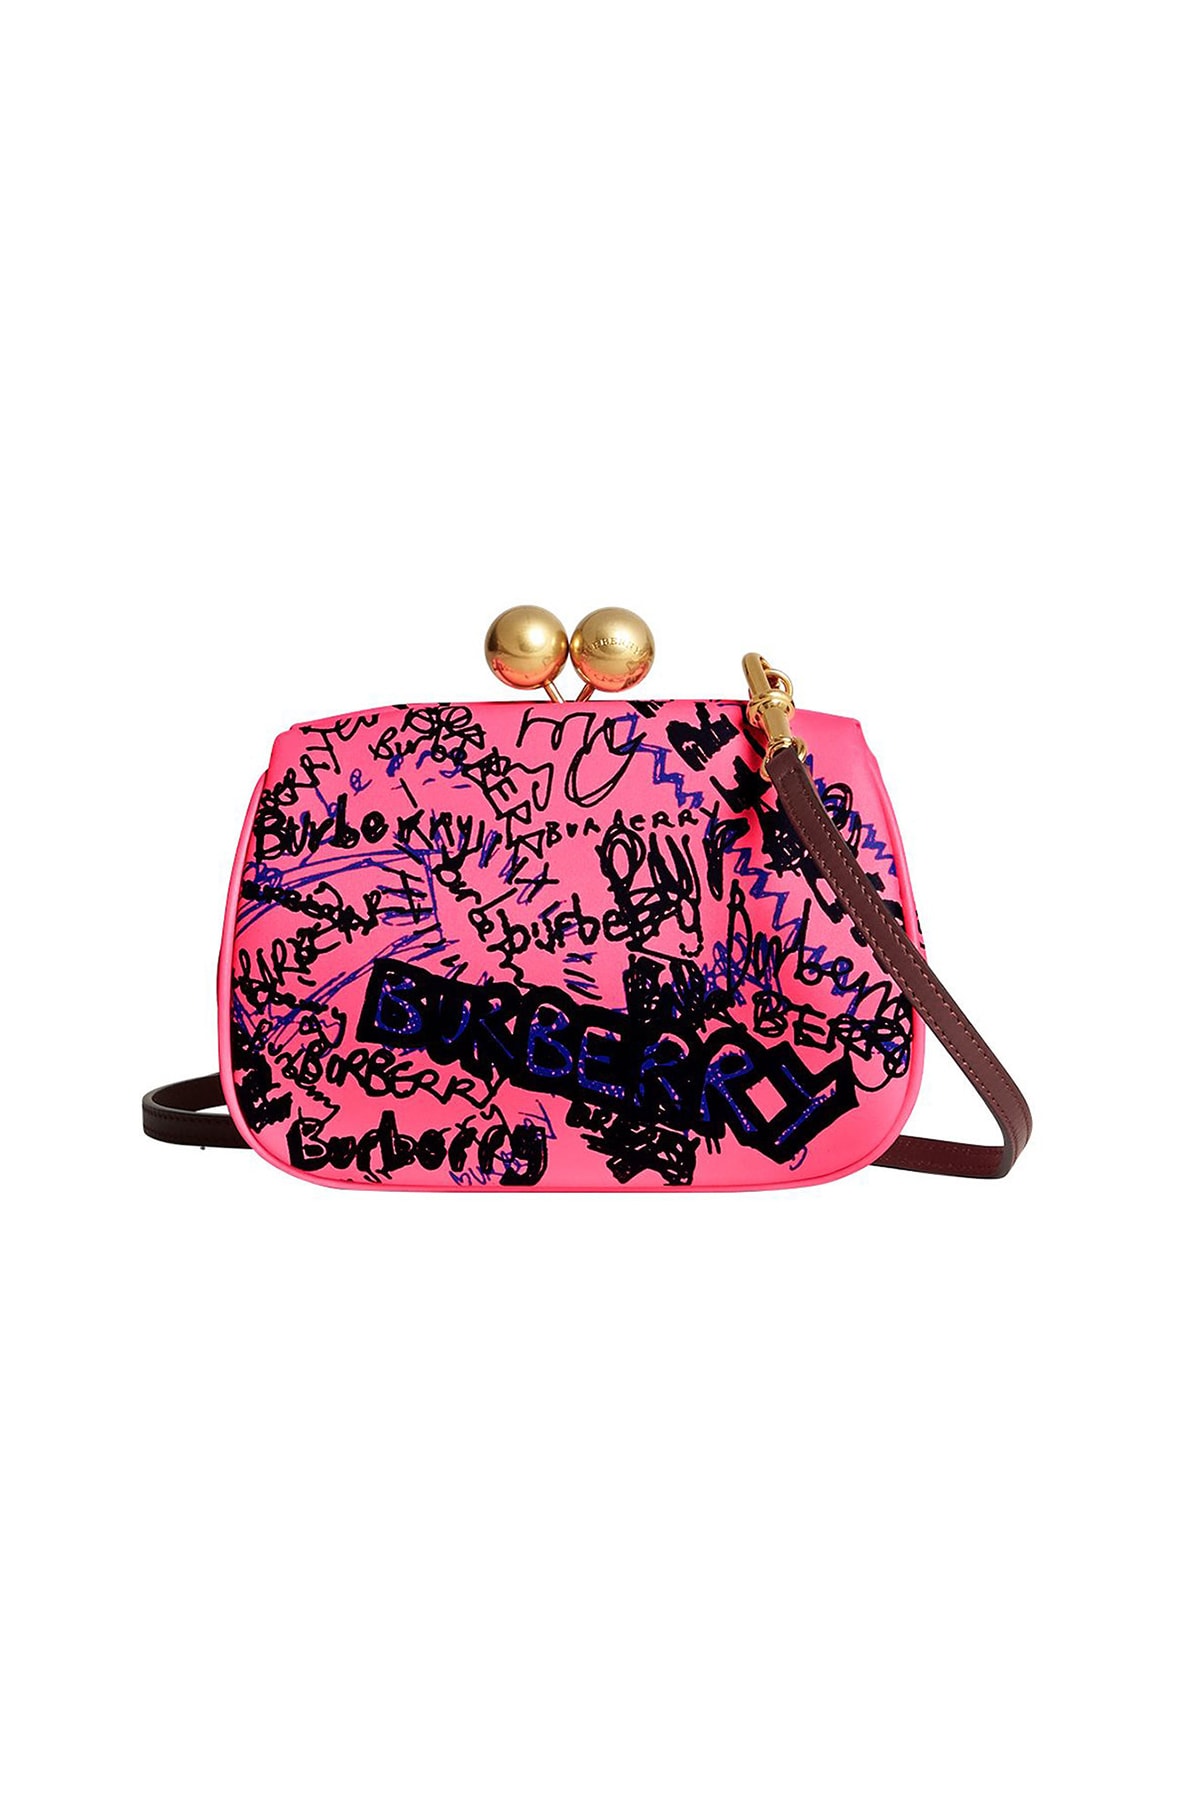 burberry neon pink doodle print clutch bag detachable strap gold hardware